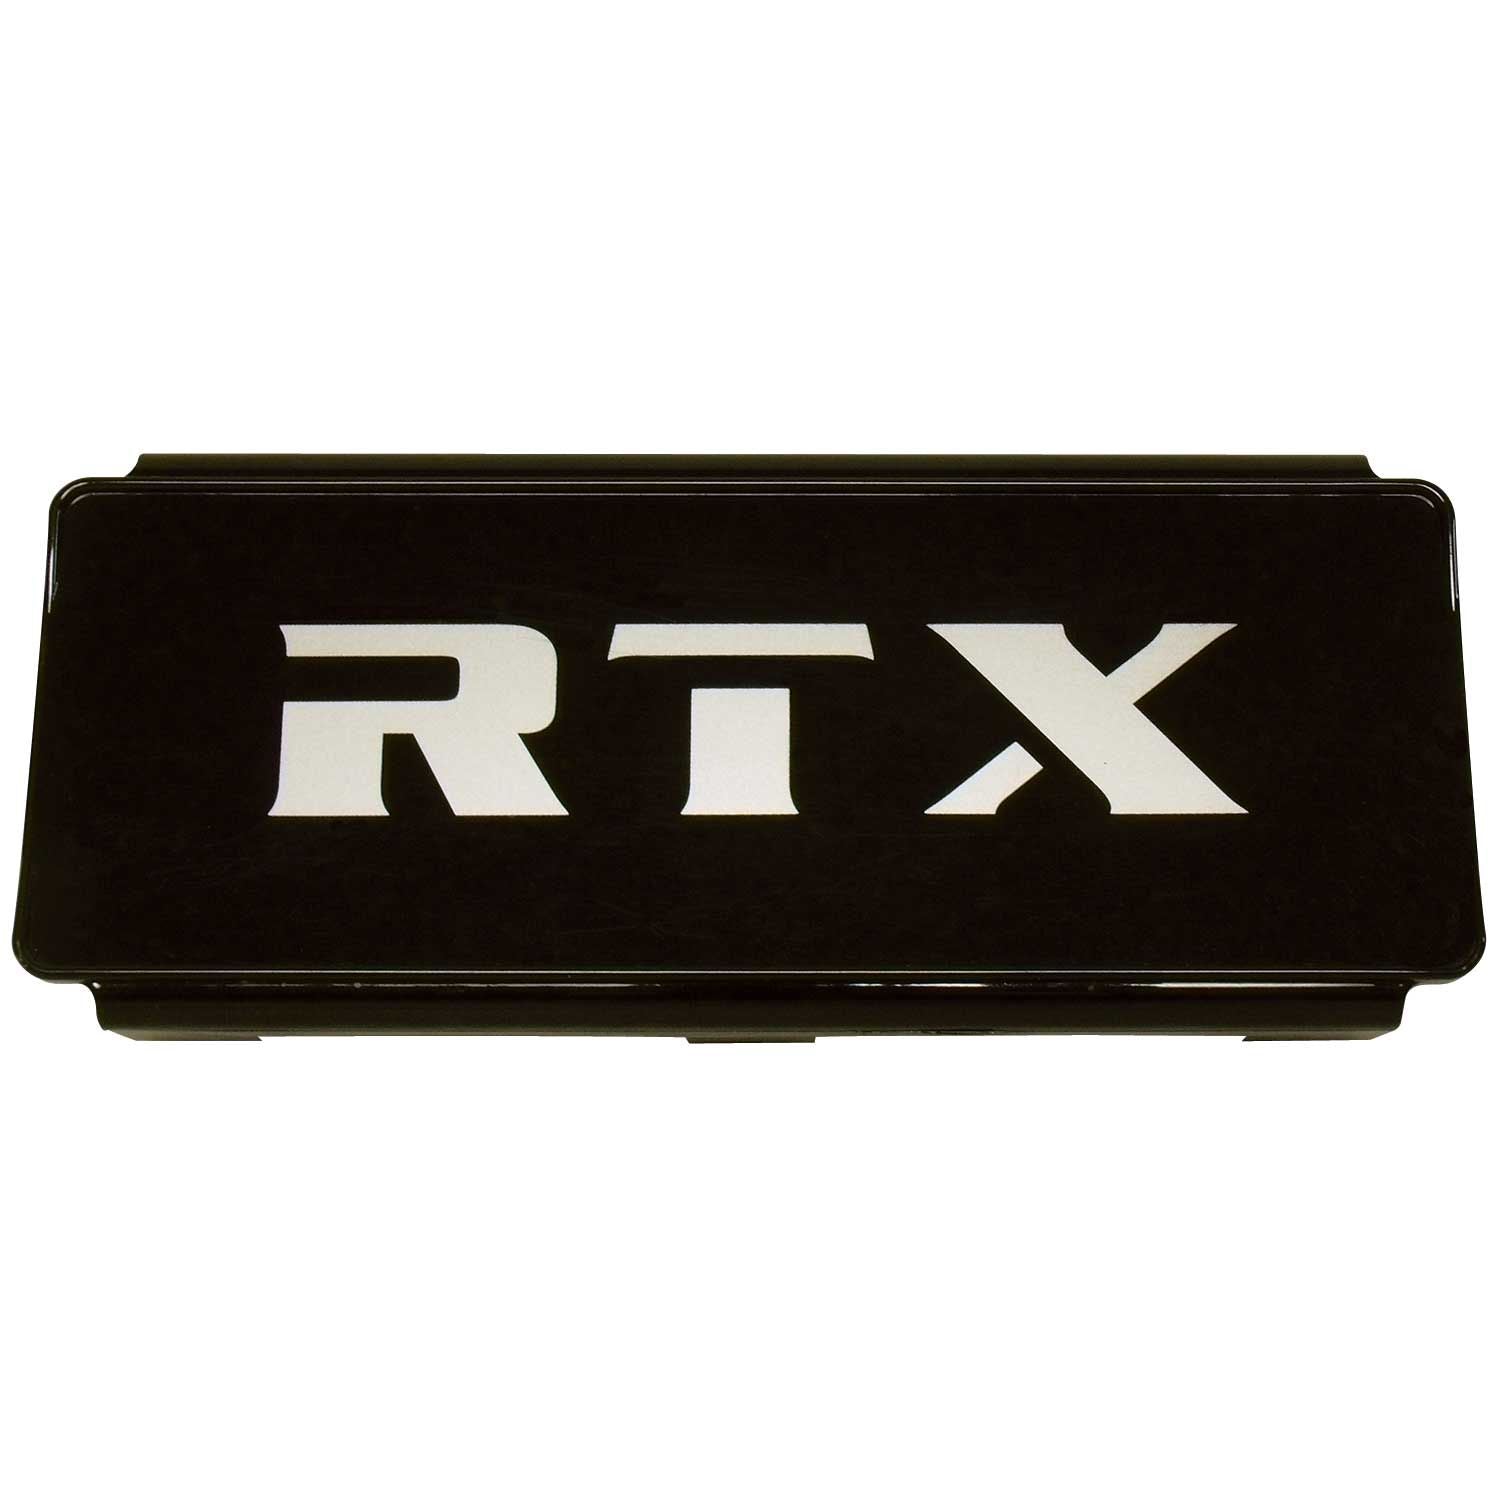 BLACK RTX LED COVER